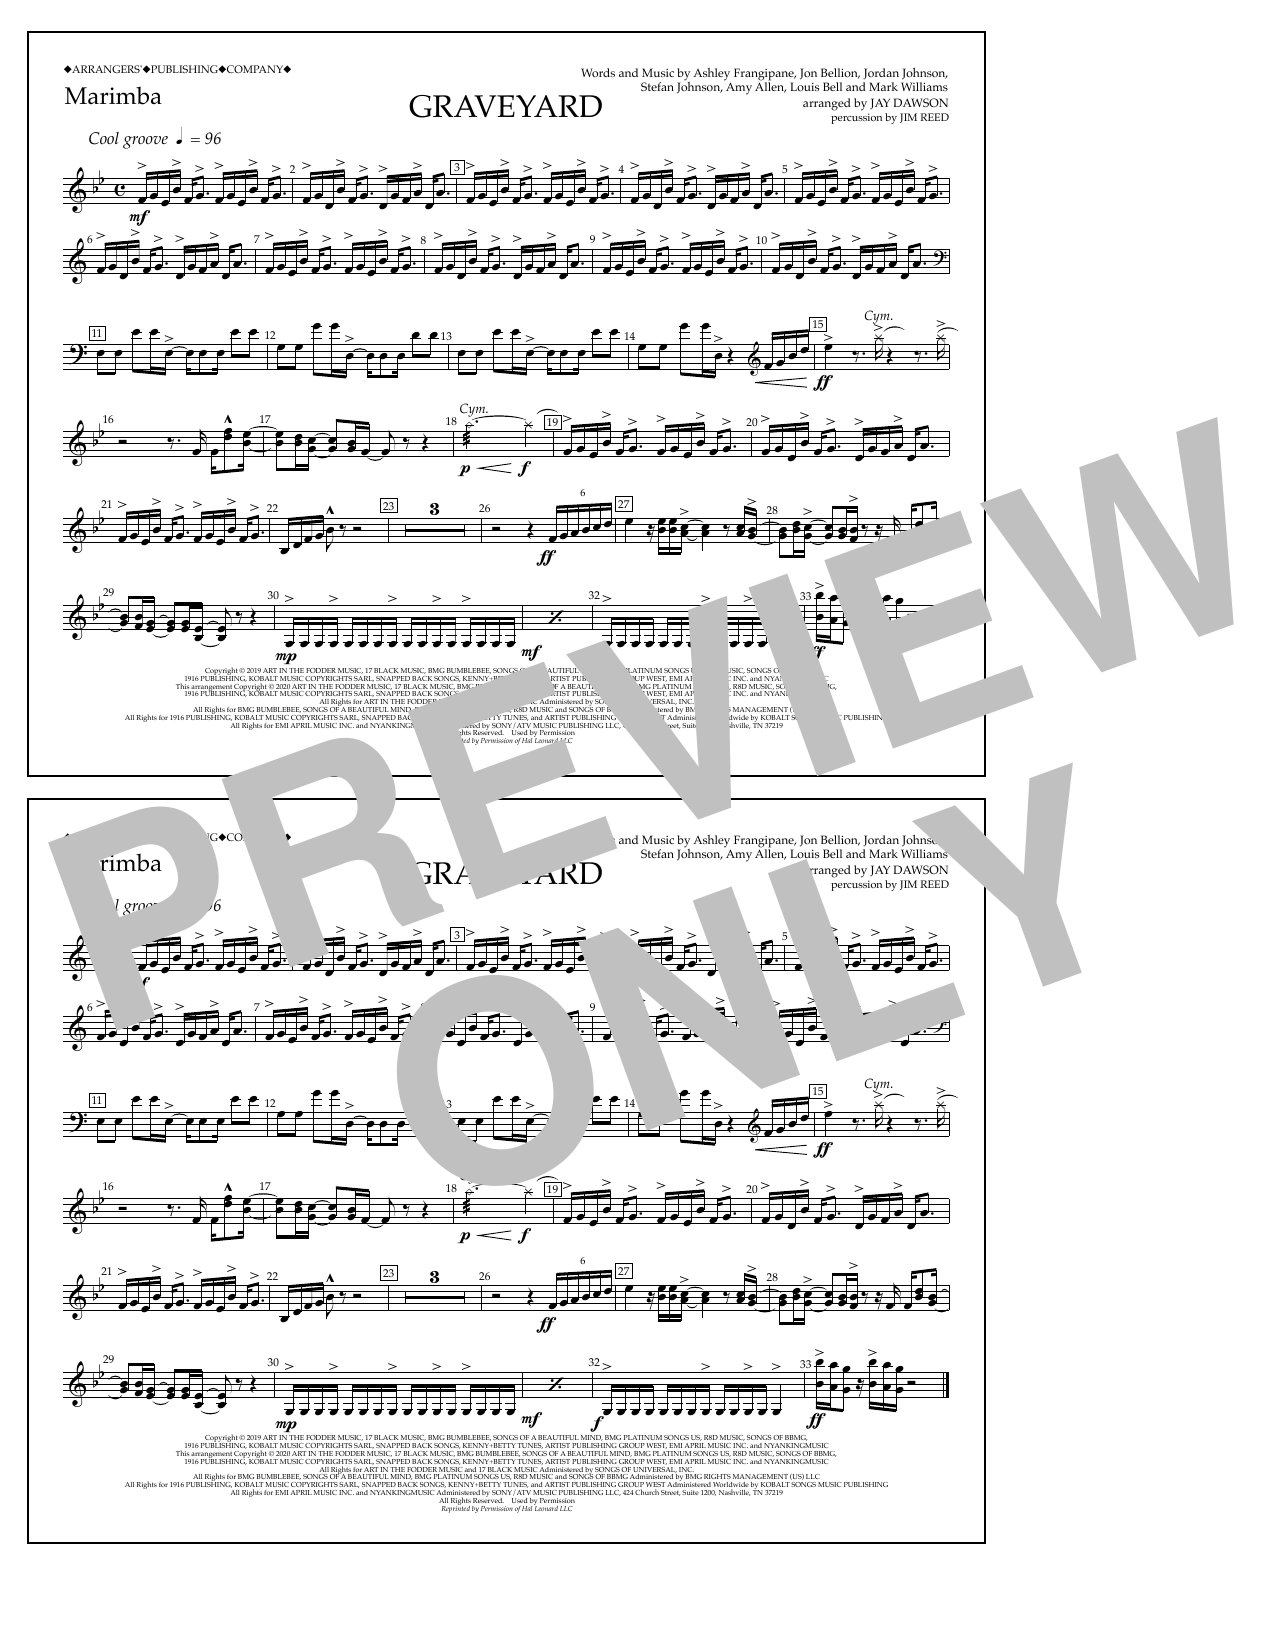 Halsey Graveyard (arr. Jay Dawson) - Marimba Sheet Music Notes & Chords for Marching Band - Download or Print PDF